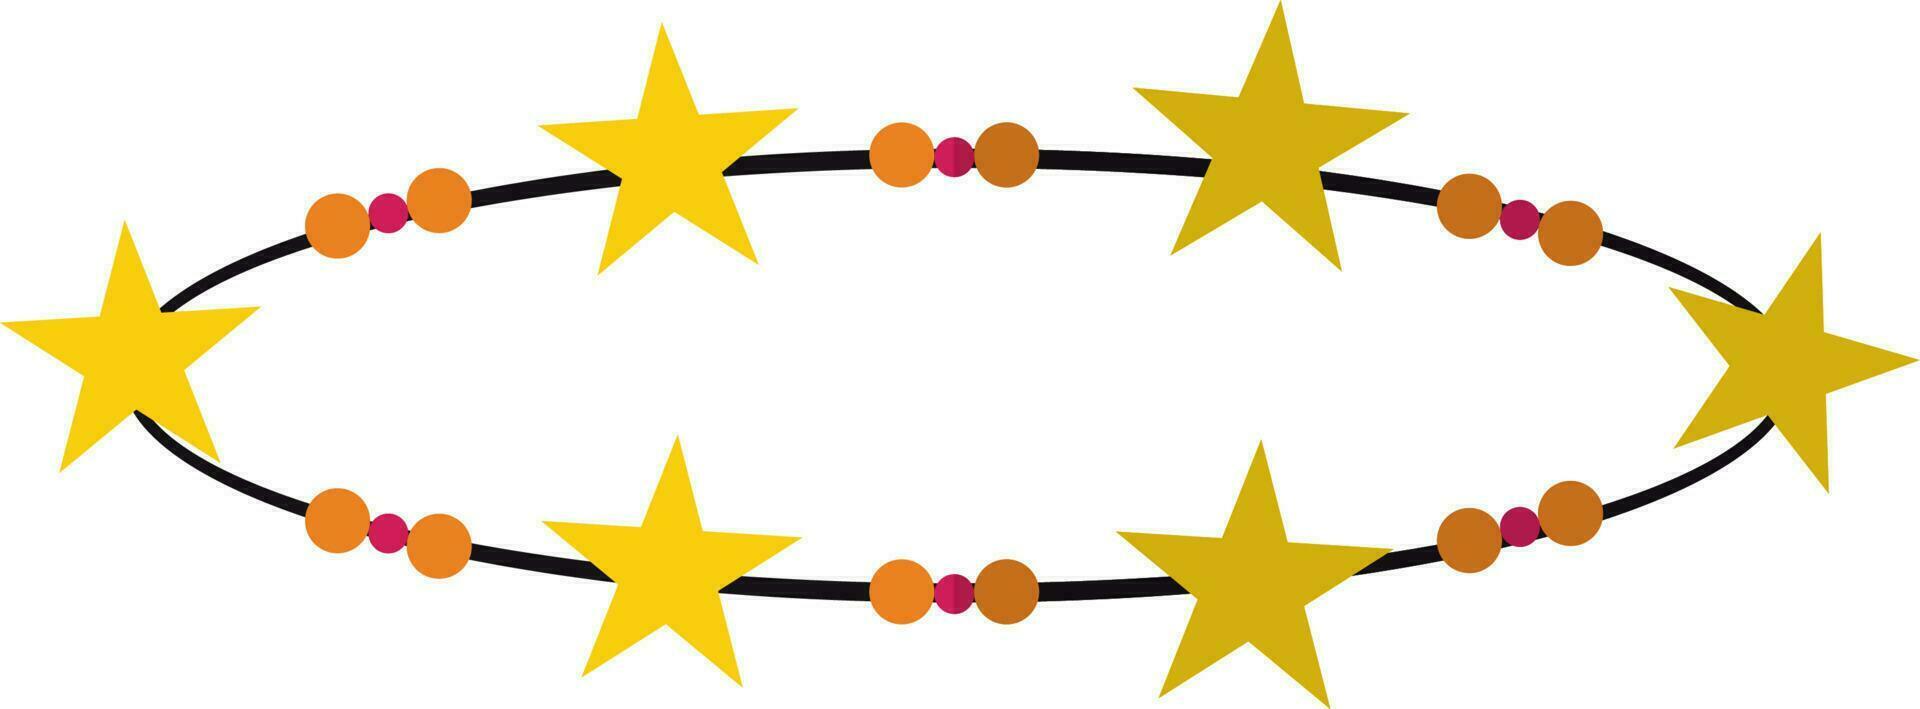 amarillo estrella decorado corona en circular forma. vector